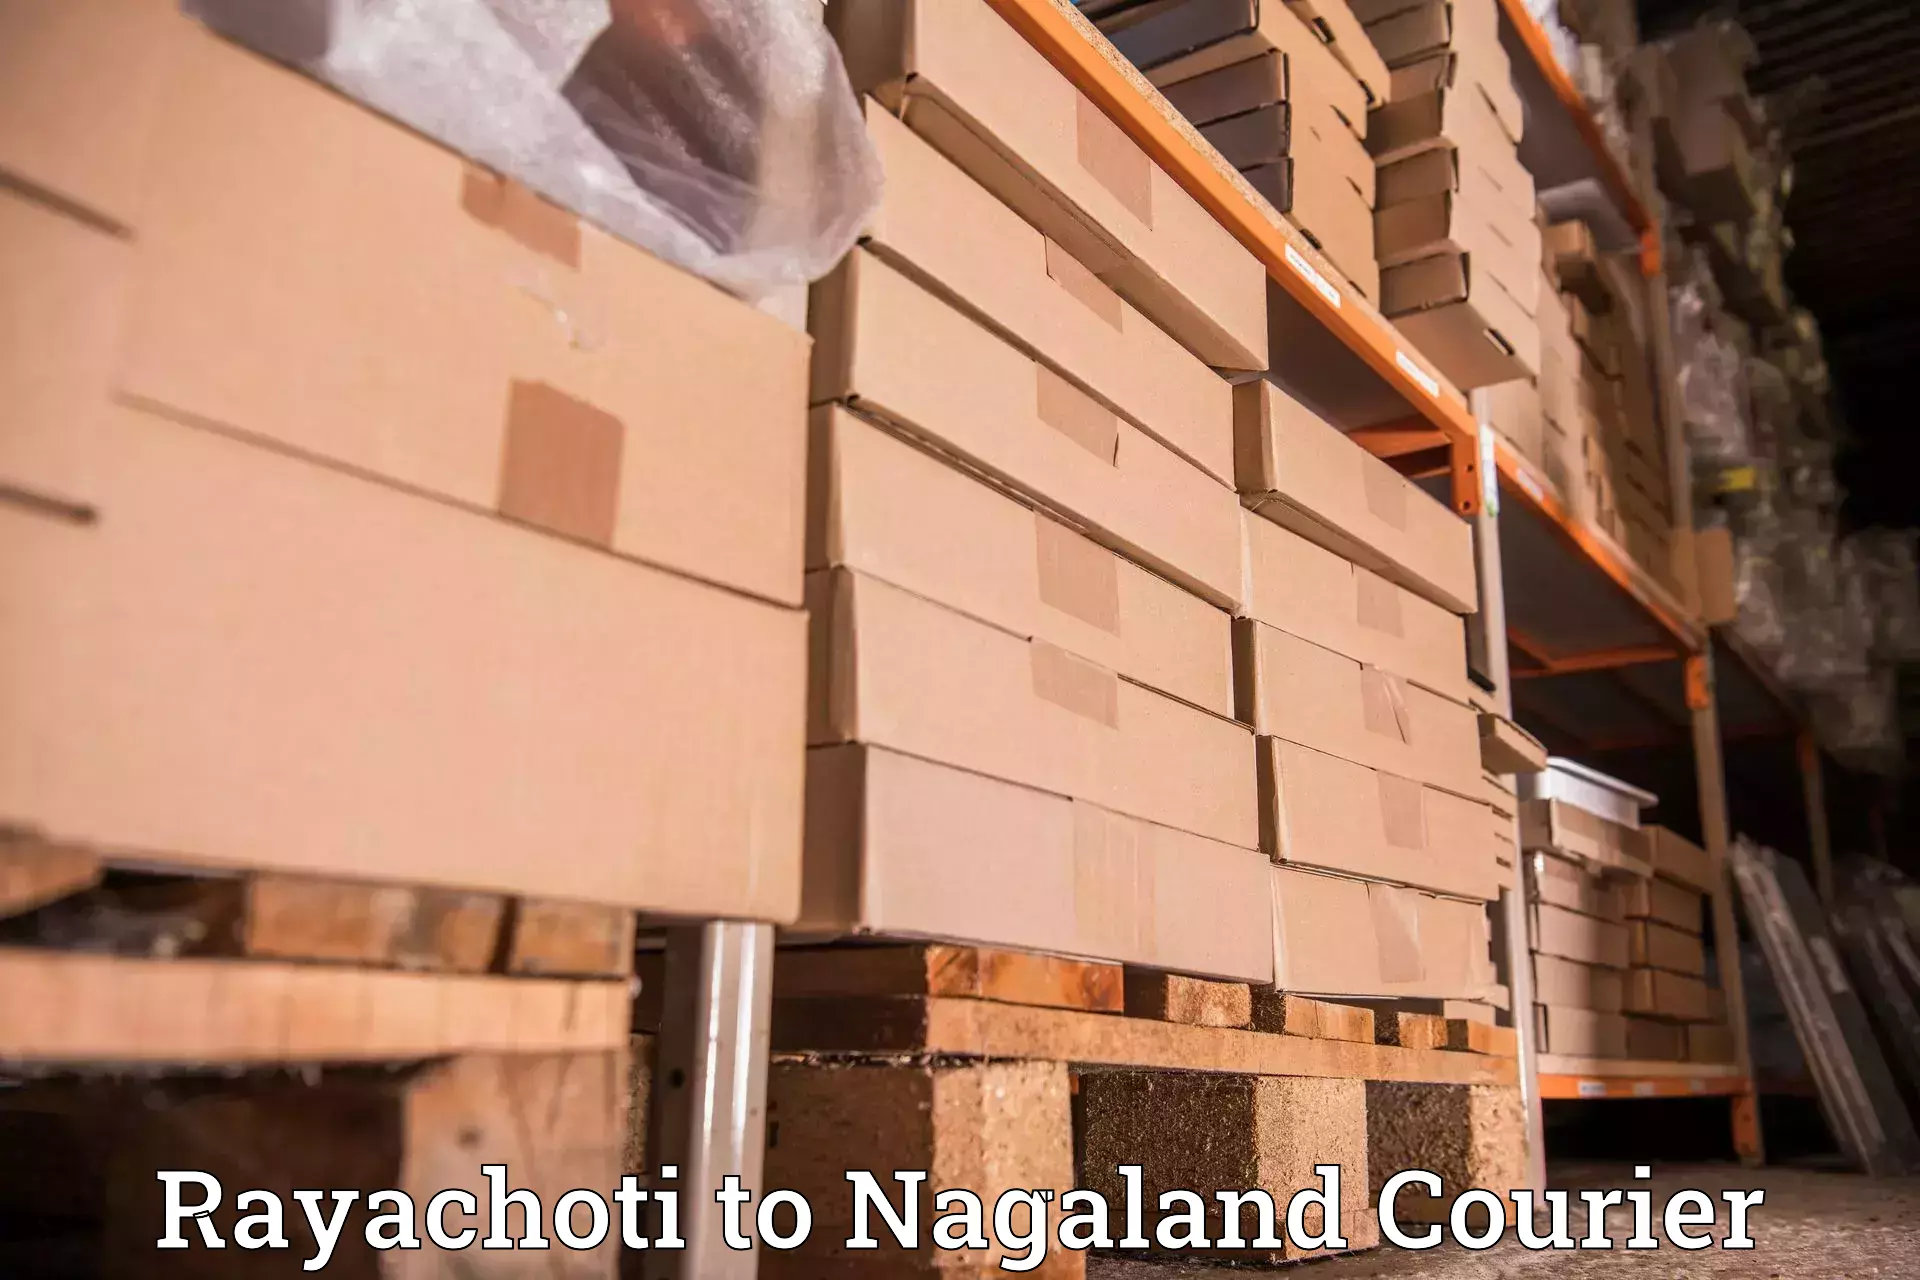 User-friendly courier app Rayachoti to Nagaland